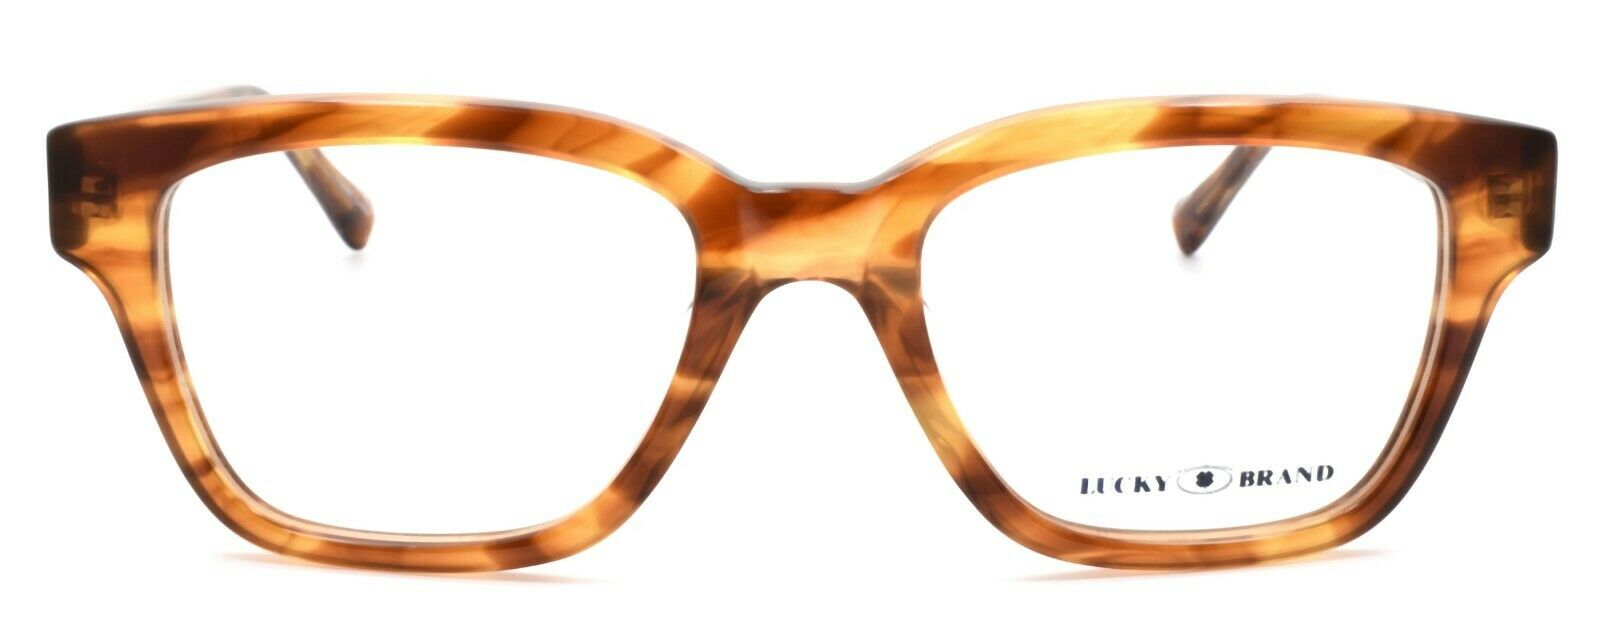 2-LUCKY BRAND Venturer UF Men's Eyeglasses Frames 50-19-145 Brown + CASE-751286249286-IKSpecs